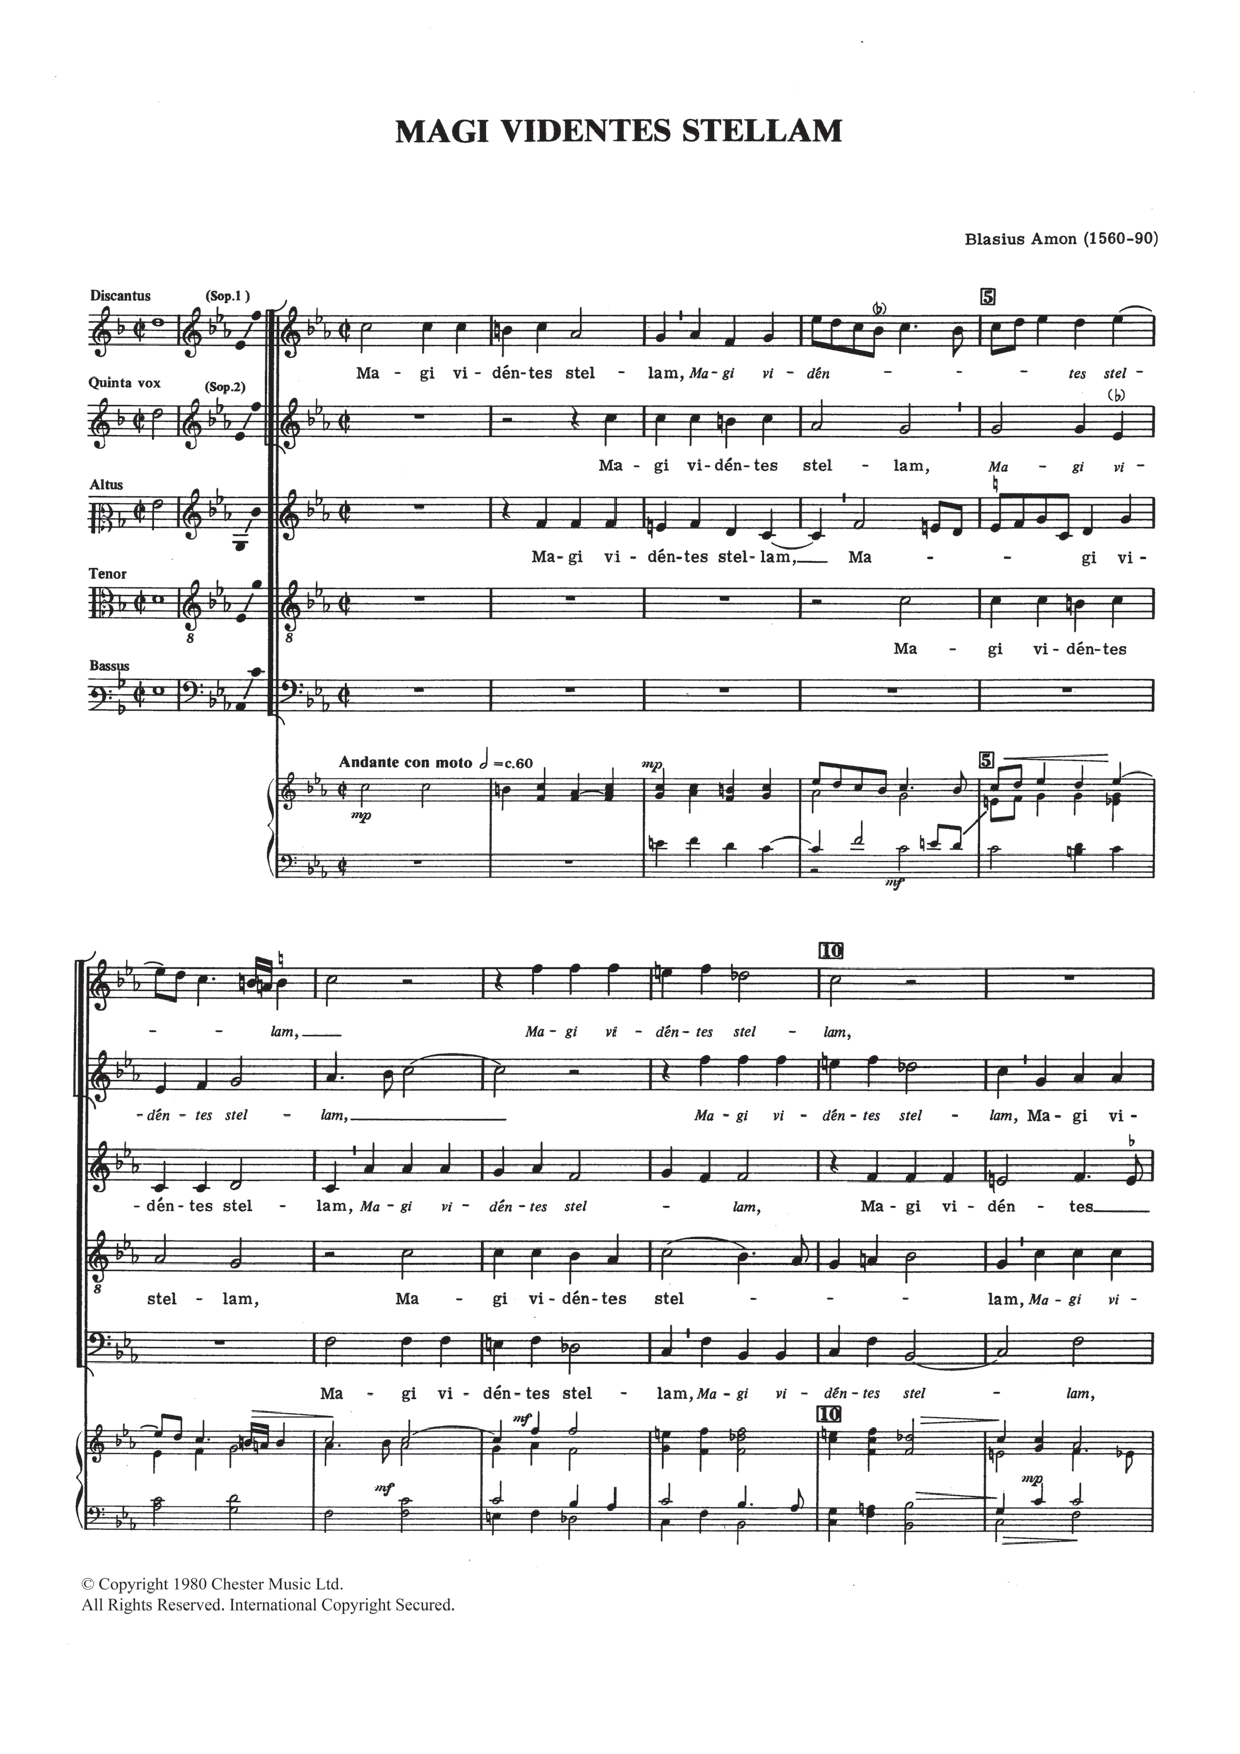 Blasius Amon Magi Videntes Stellam Sheet Music Notes & Chords for Choral SAATB - Download or Print PDF